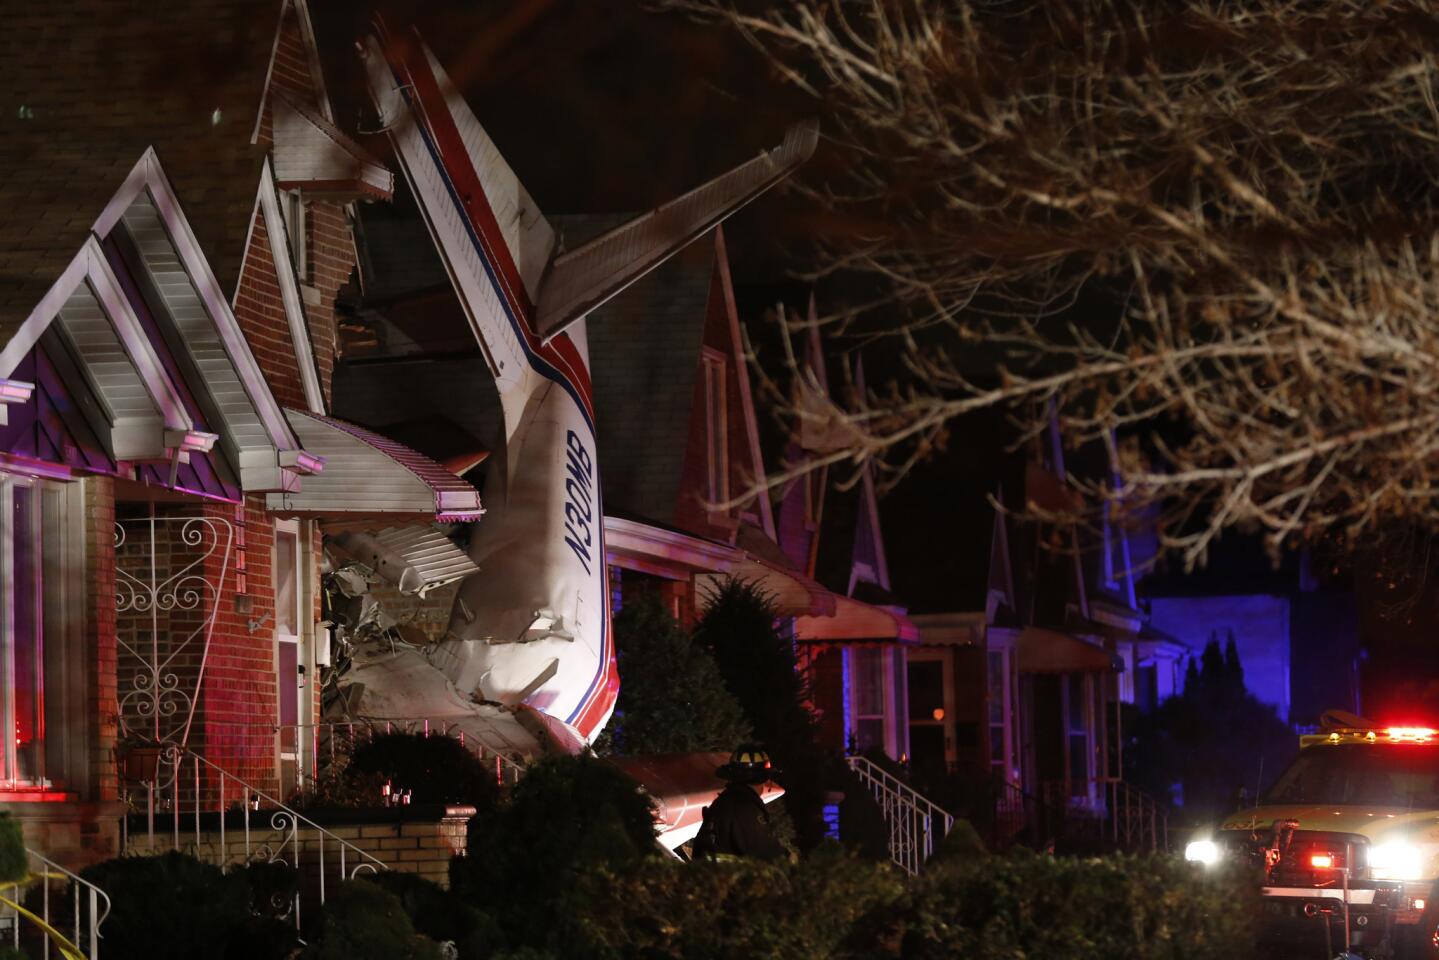 Plane crashes into house